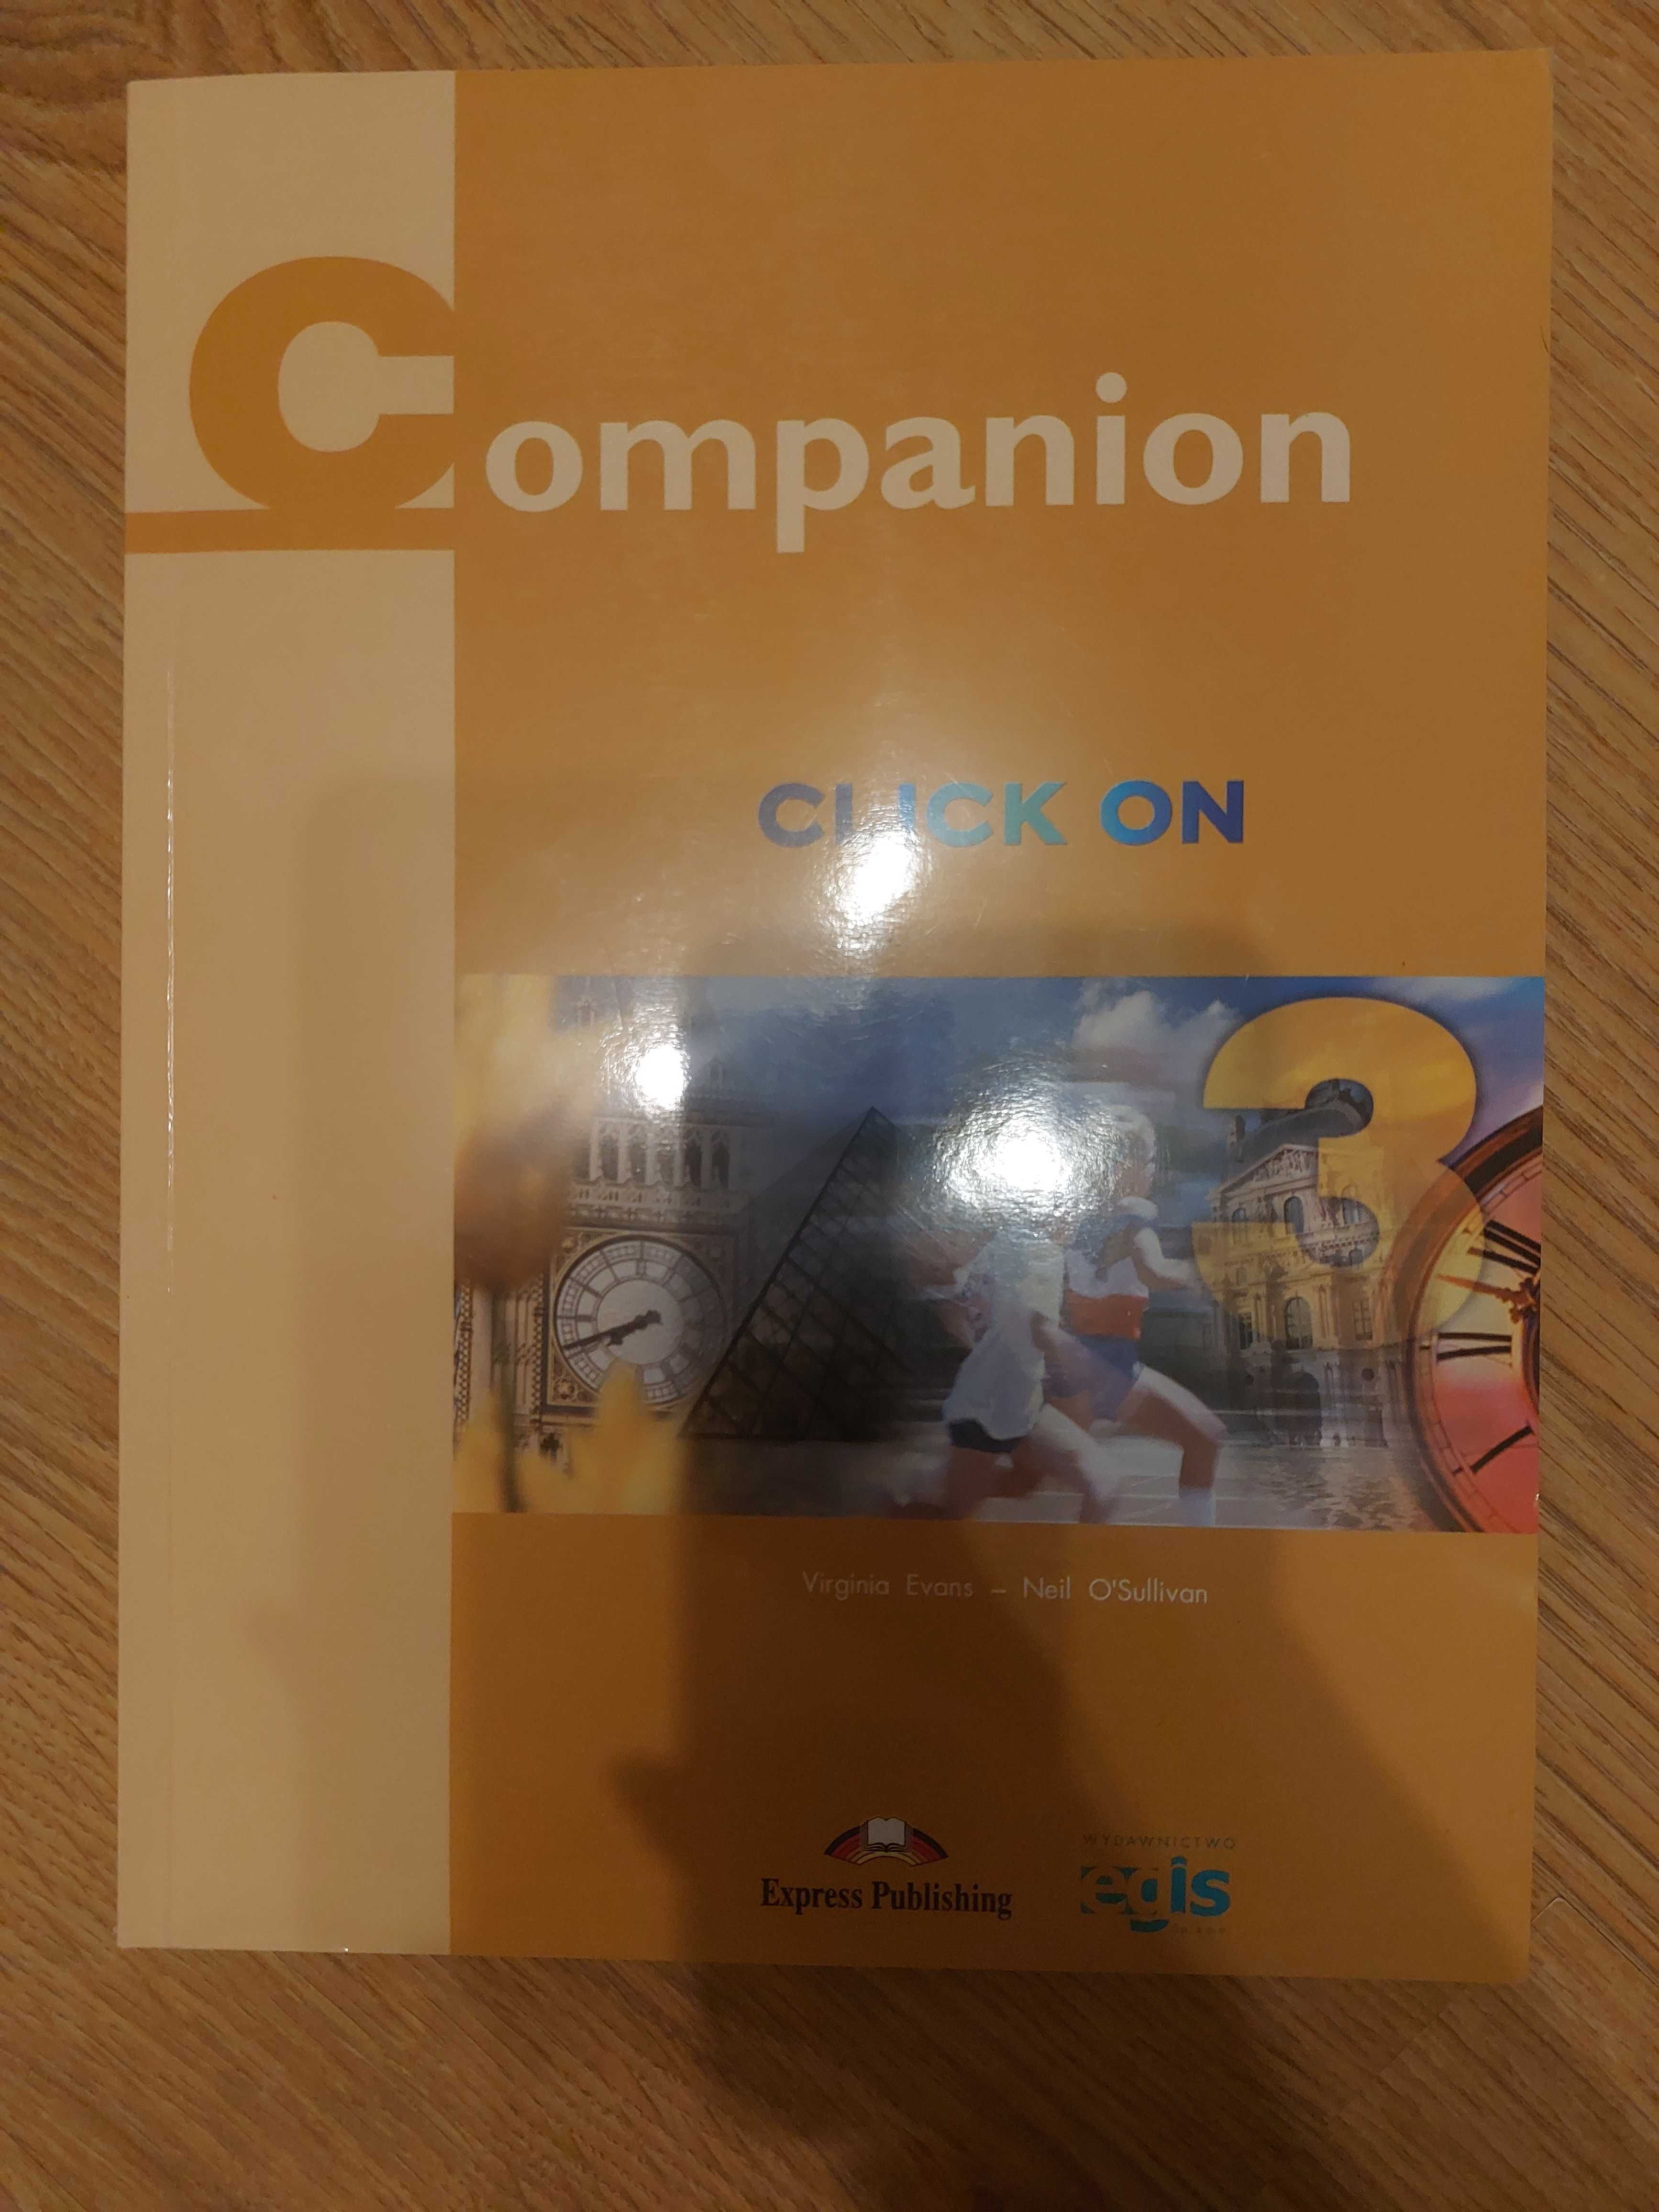 Companion click on 3